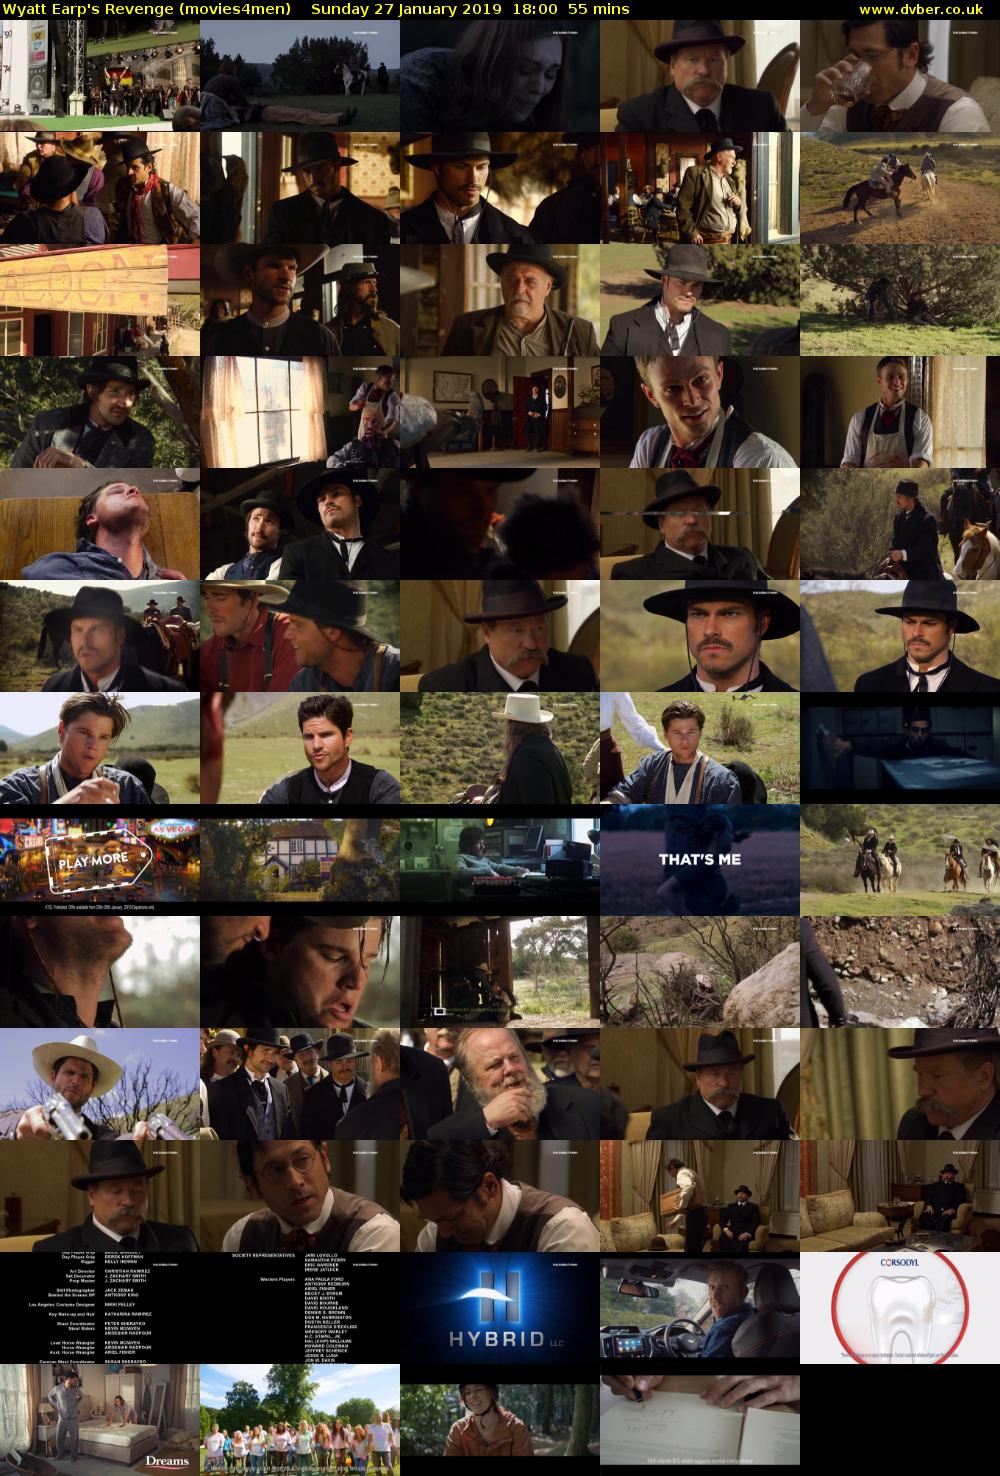 Wyatt Earp's Revenge (movies4men) Sunday 27 January 2019 18:00 - 18:55